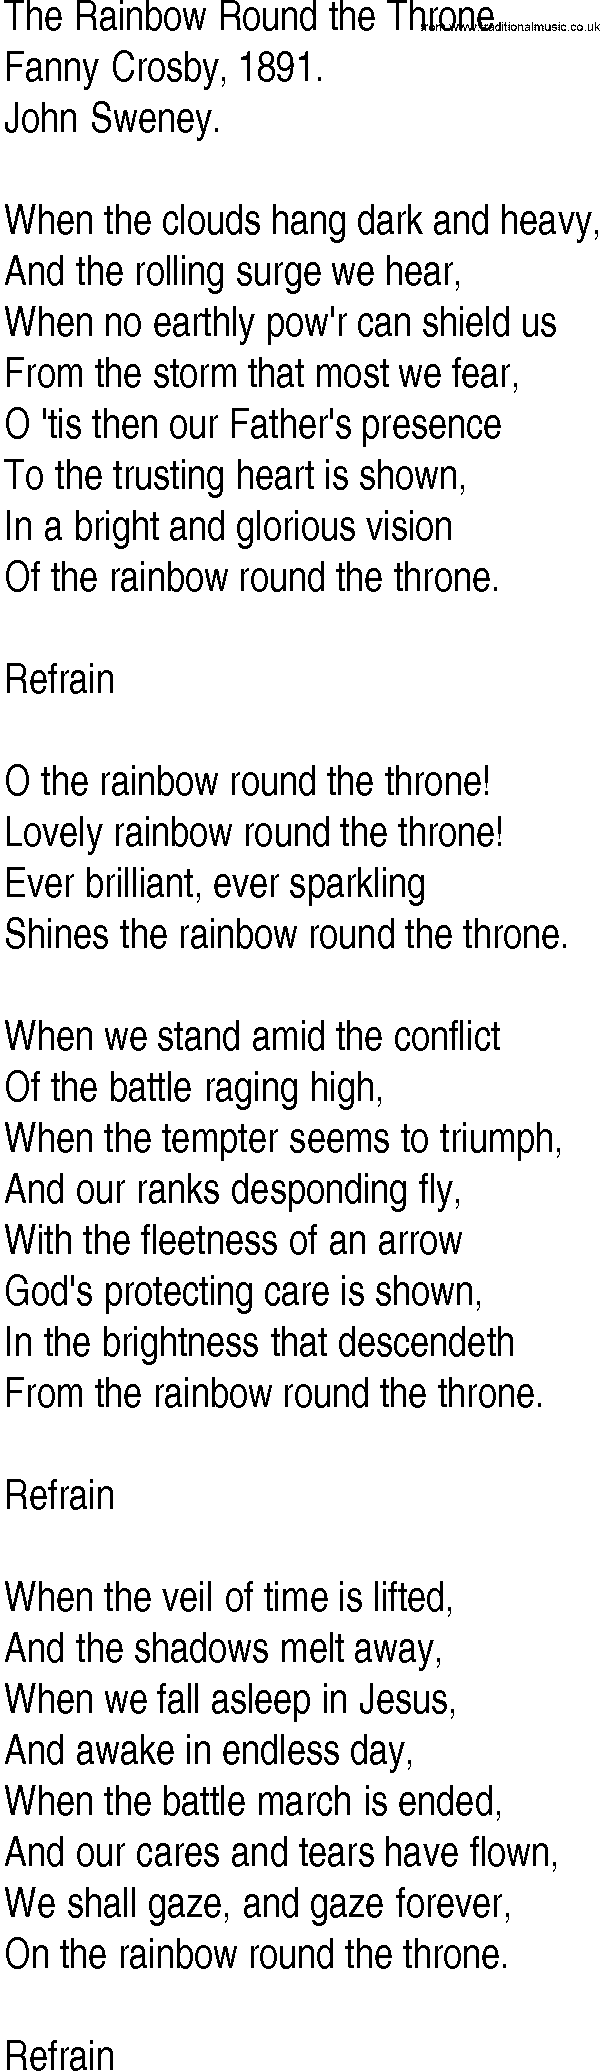 Hymn and Gospel Song: The Rainbow Round the Throne by Fanny Crosby lyrics